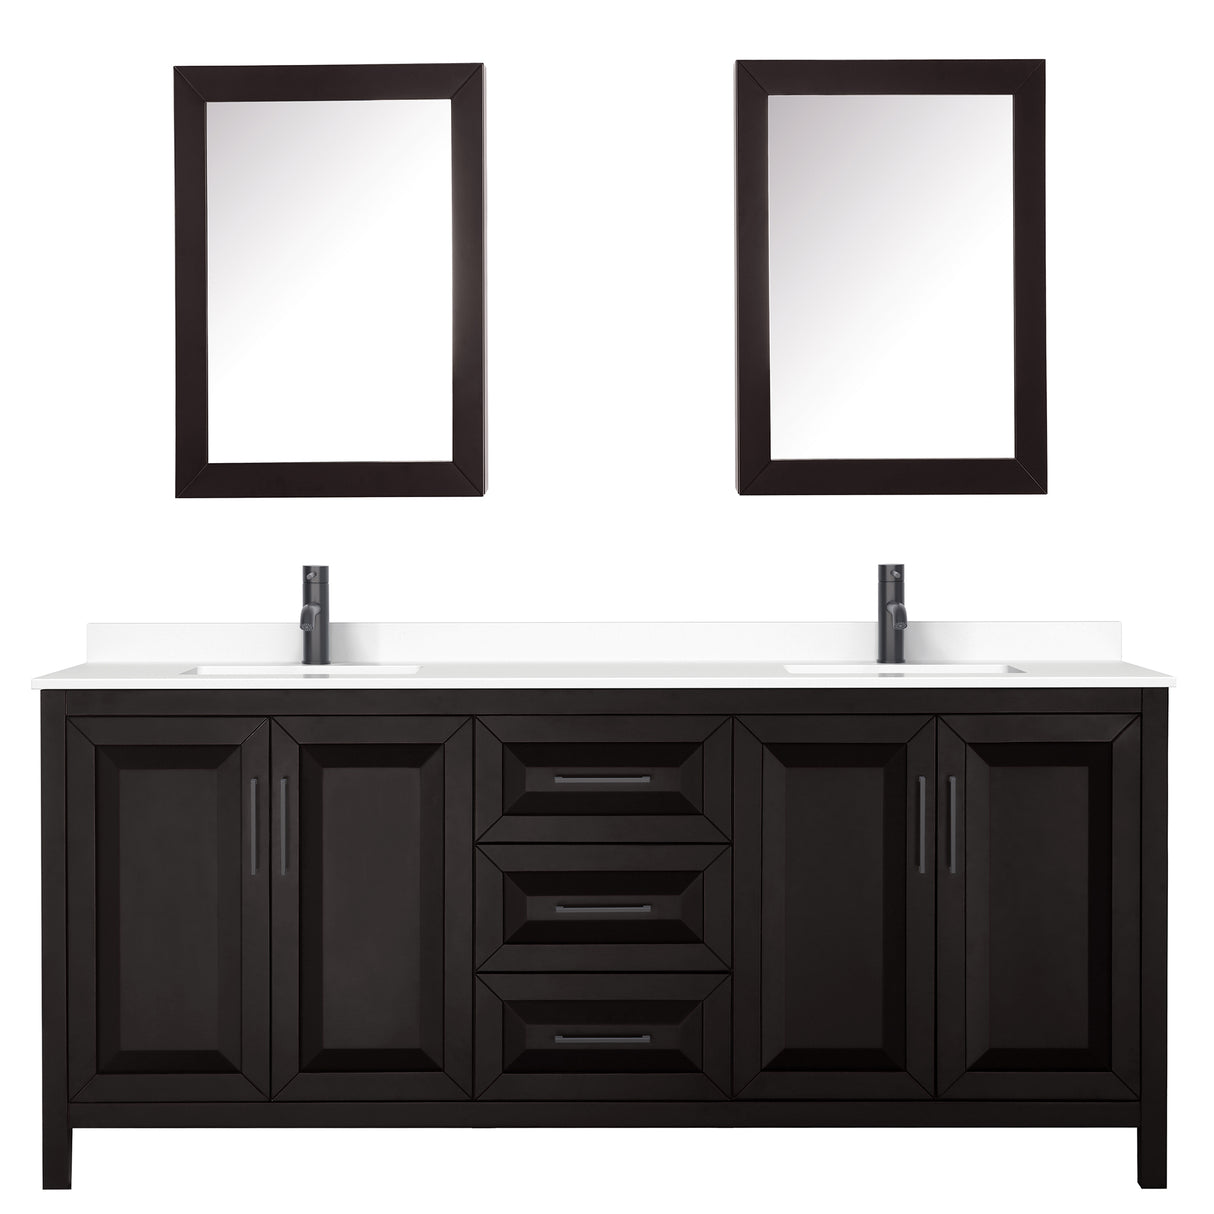 Daria 80 Inch Double Bathroom Vanity in Dark Espresso White Cultured Marble Countertop Undermount Square Sinks Matte Black Trim Medicine Cabinets